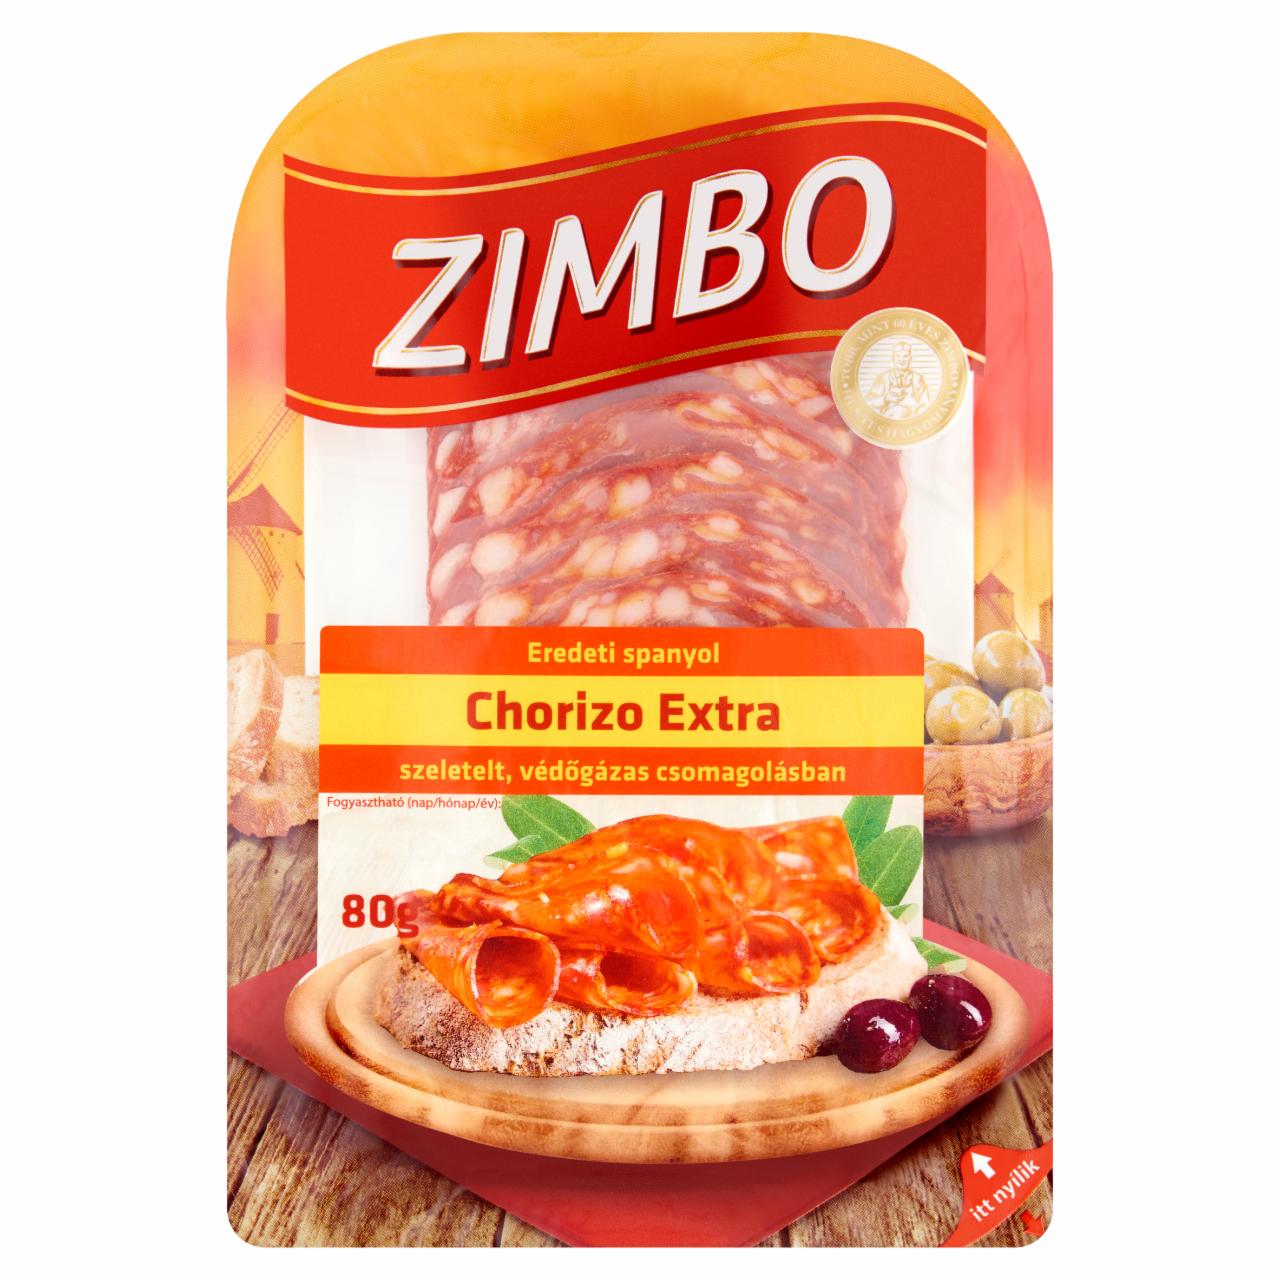 Képek - Zimbo eredeti spanyol szeletelt chorizo extra 80 g